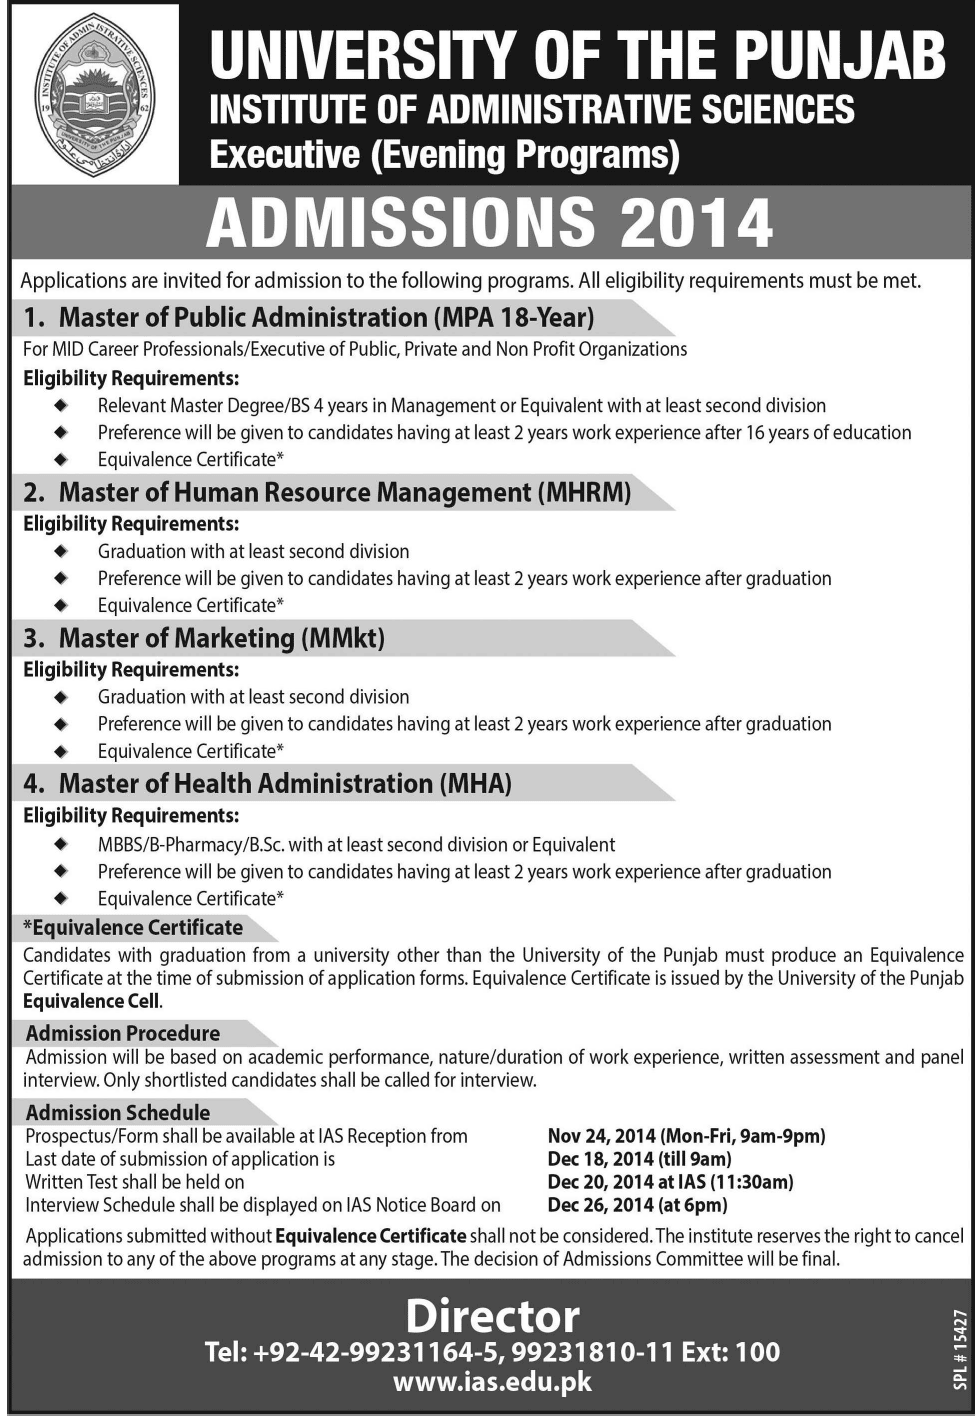 PU Institute Of Administrative Sciences Evening Entry Test Result 2014 Merit List